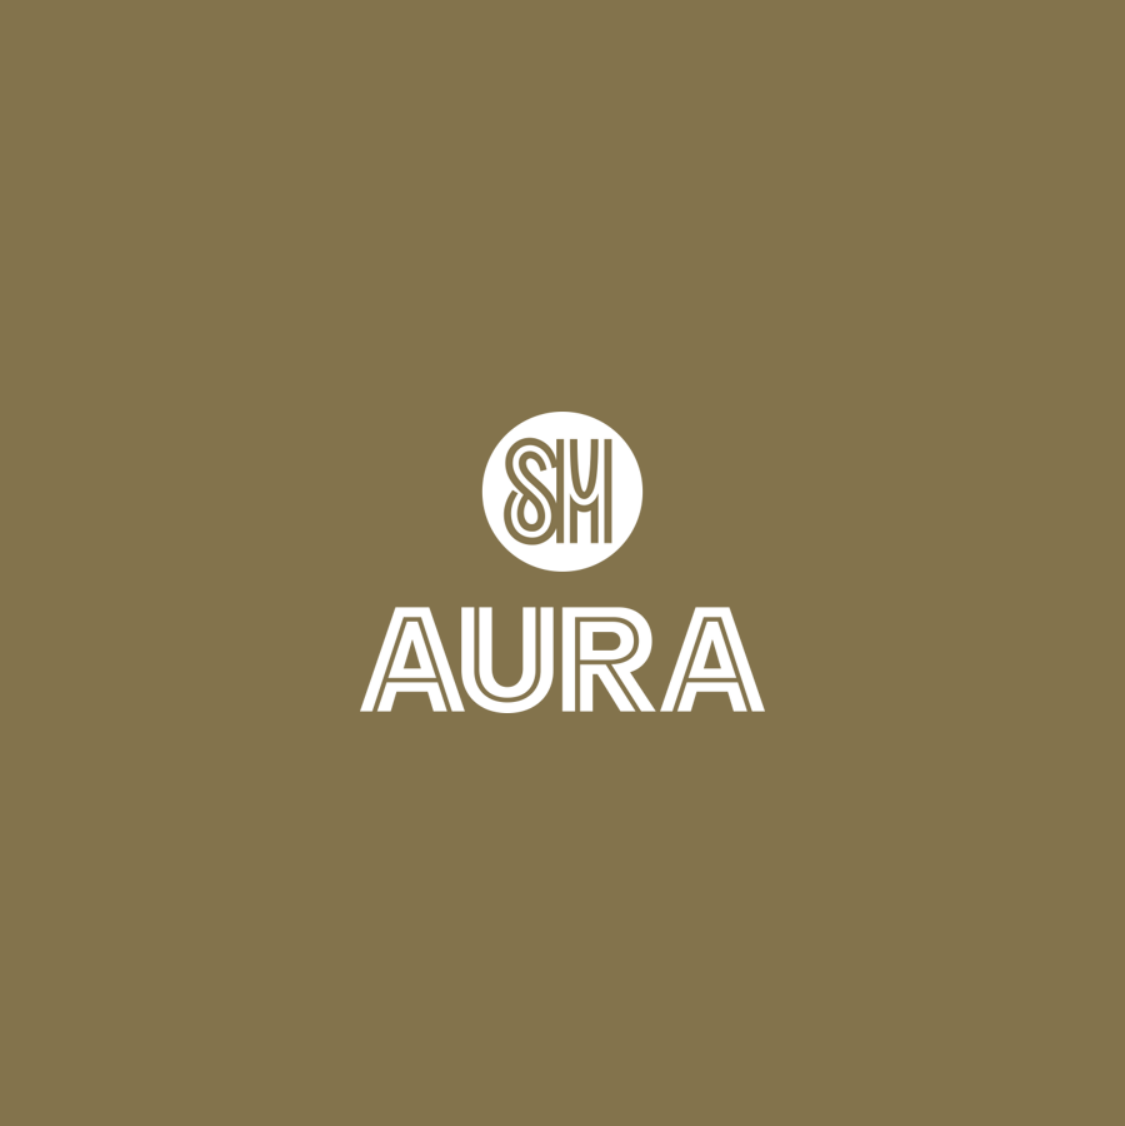 SM Aura Premier